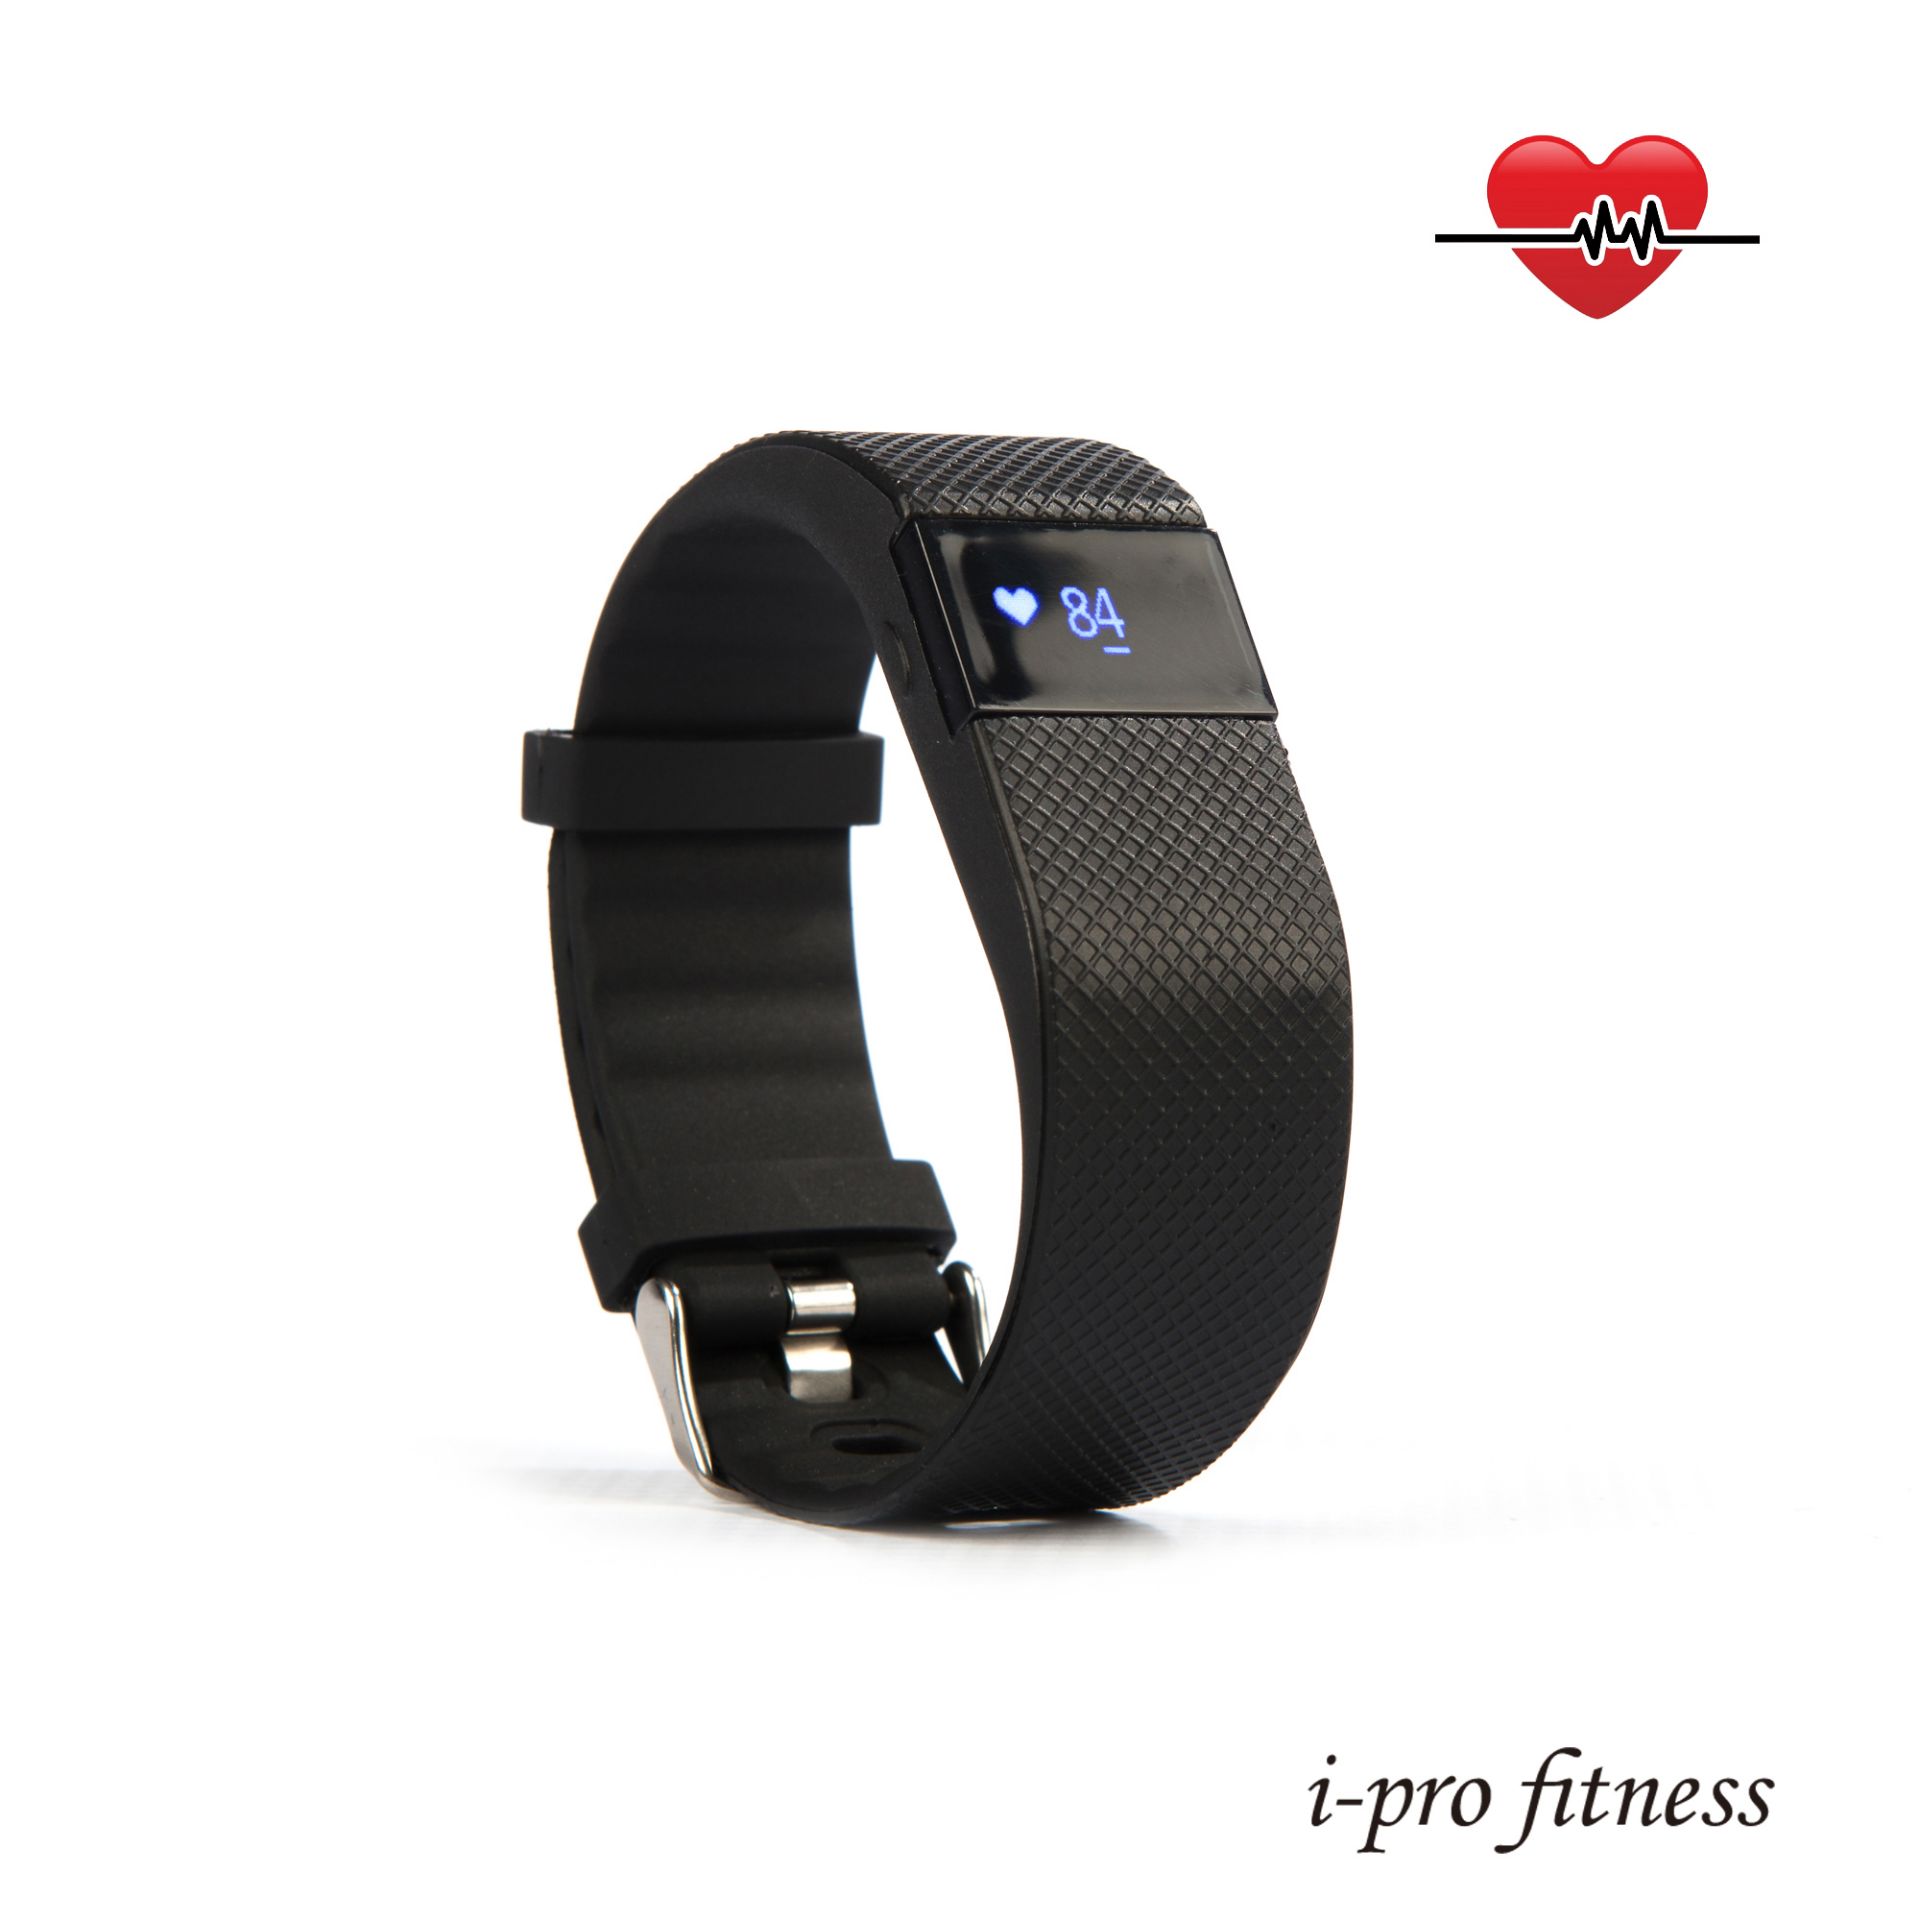 20x Fitness Tracker i-pro fitness, Bluetooth 4.0 Sports Smart Bracelet, Heart Rate Monitor - Image 3 of 8